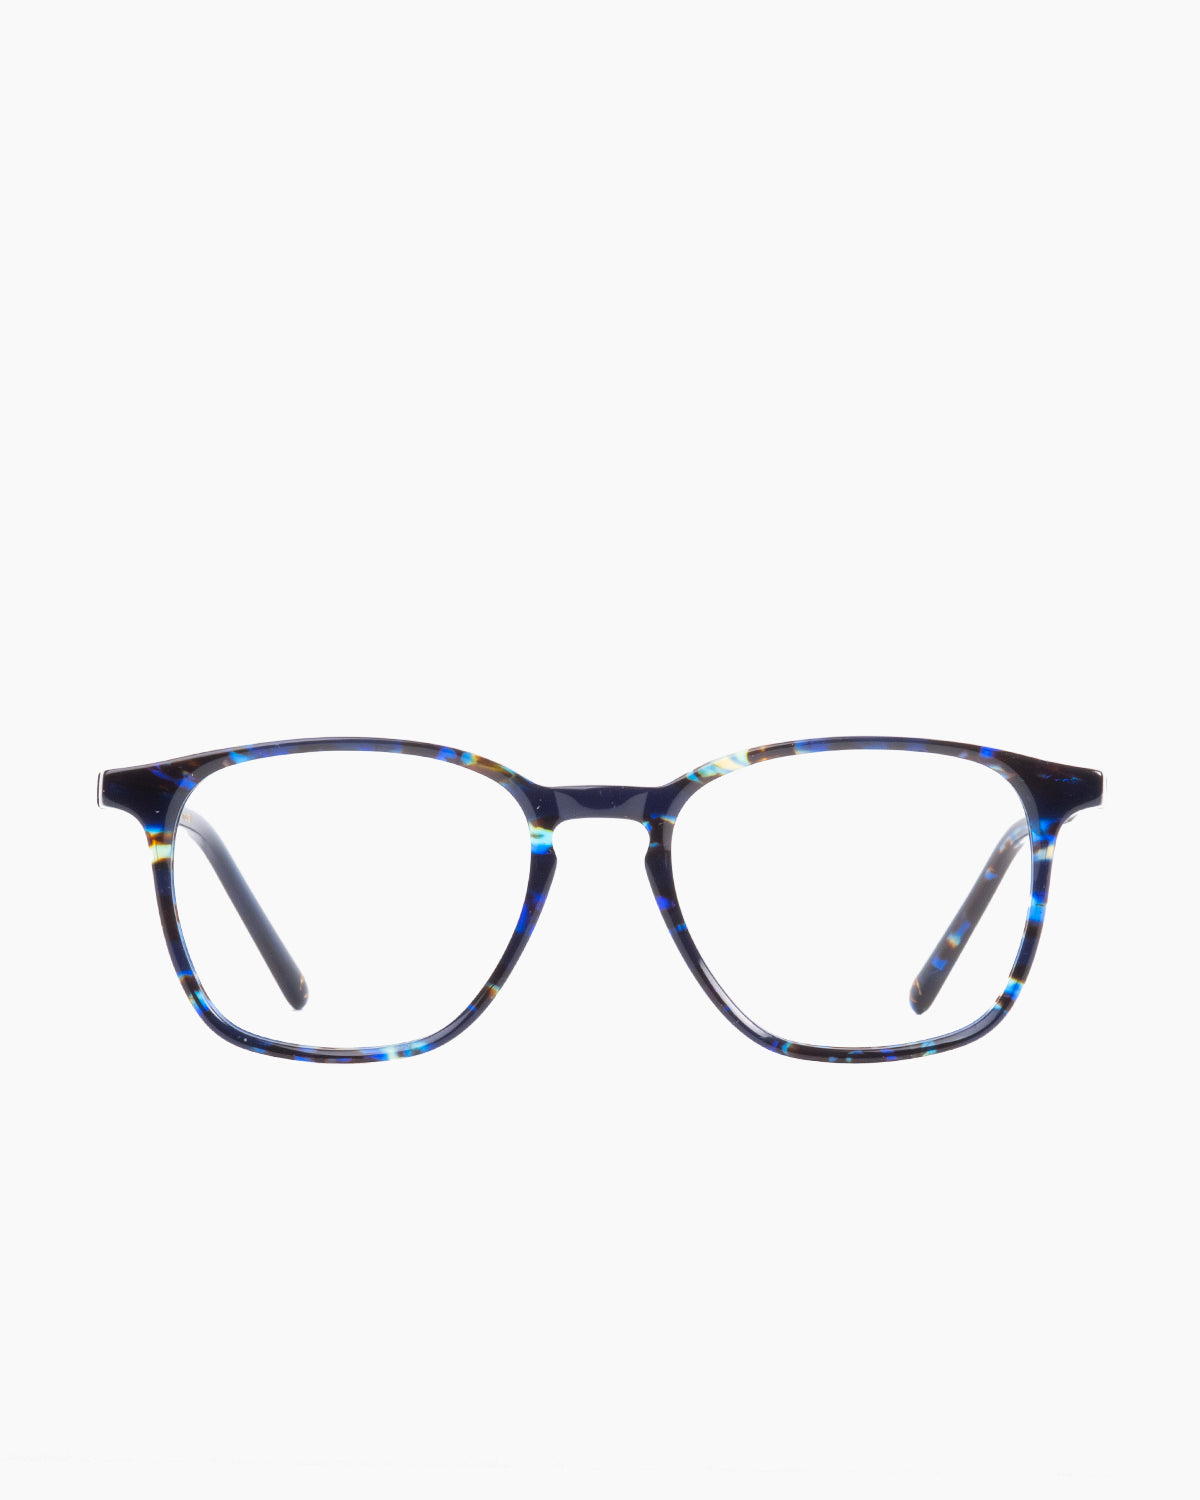 Spectacleeyeworks - J-F - 716 | Bar à lunettes:  Marie-Sophie Dion